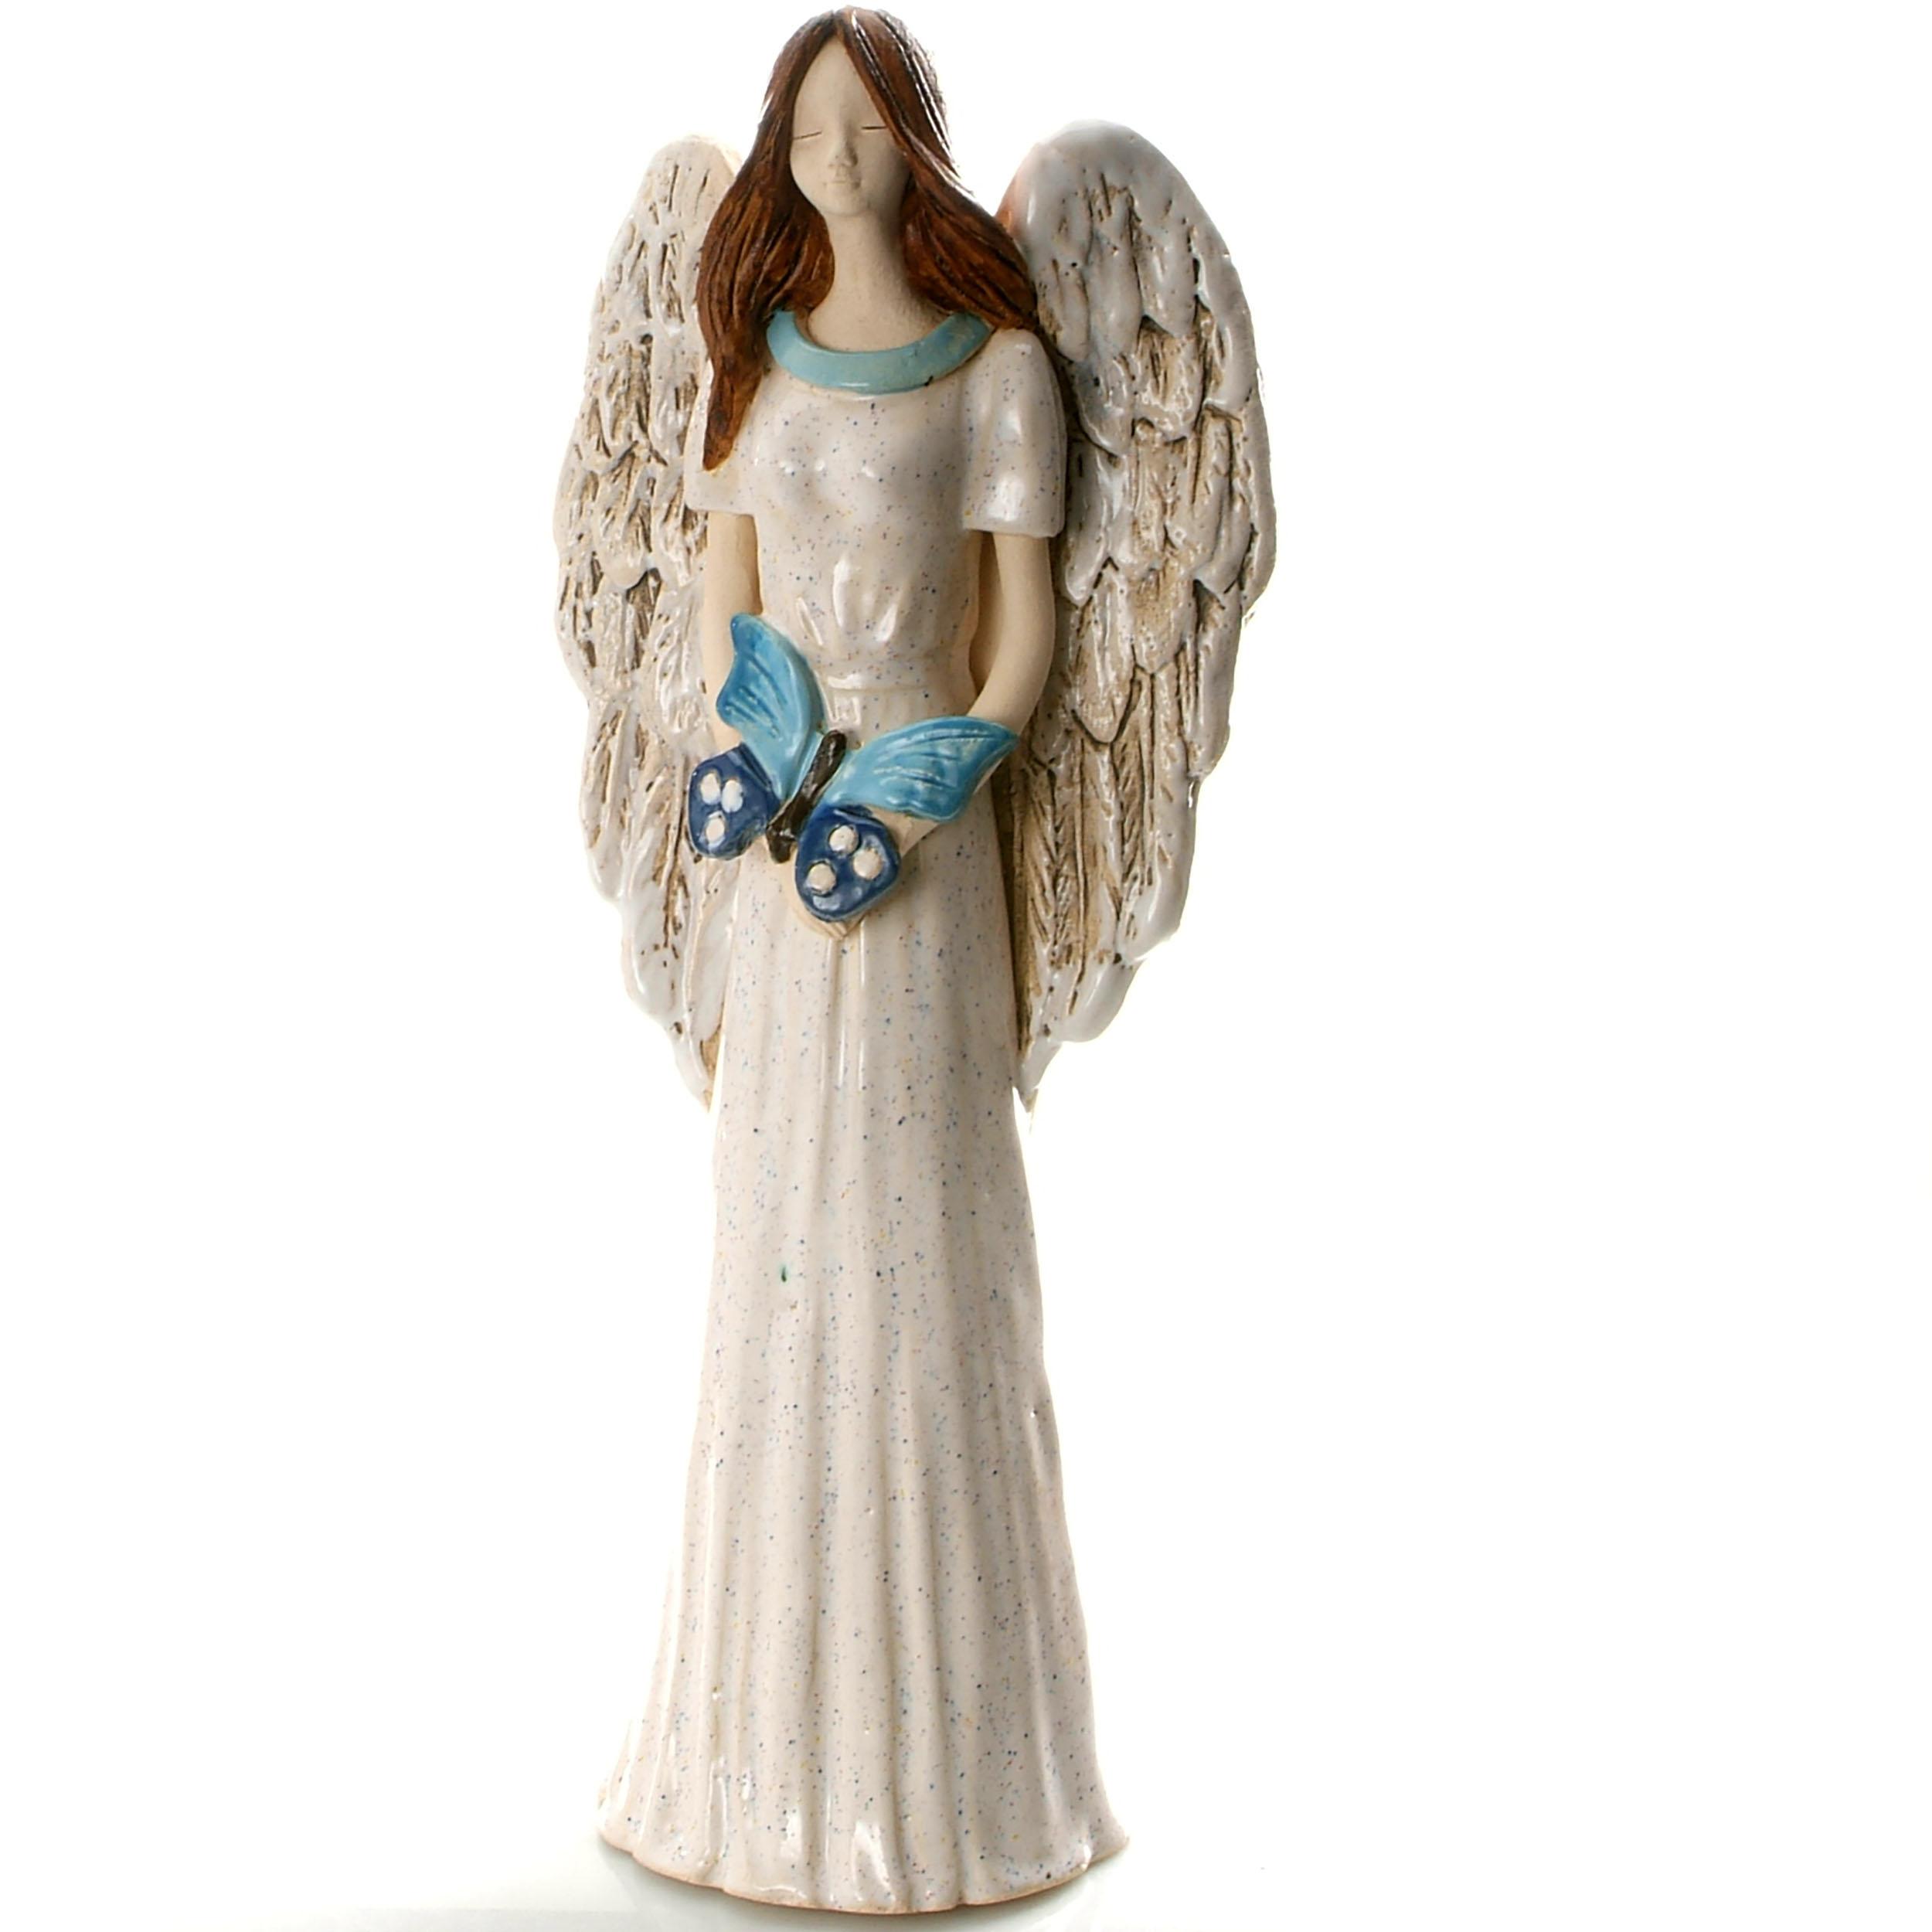 Medium Size Angel with Flowers | White